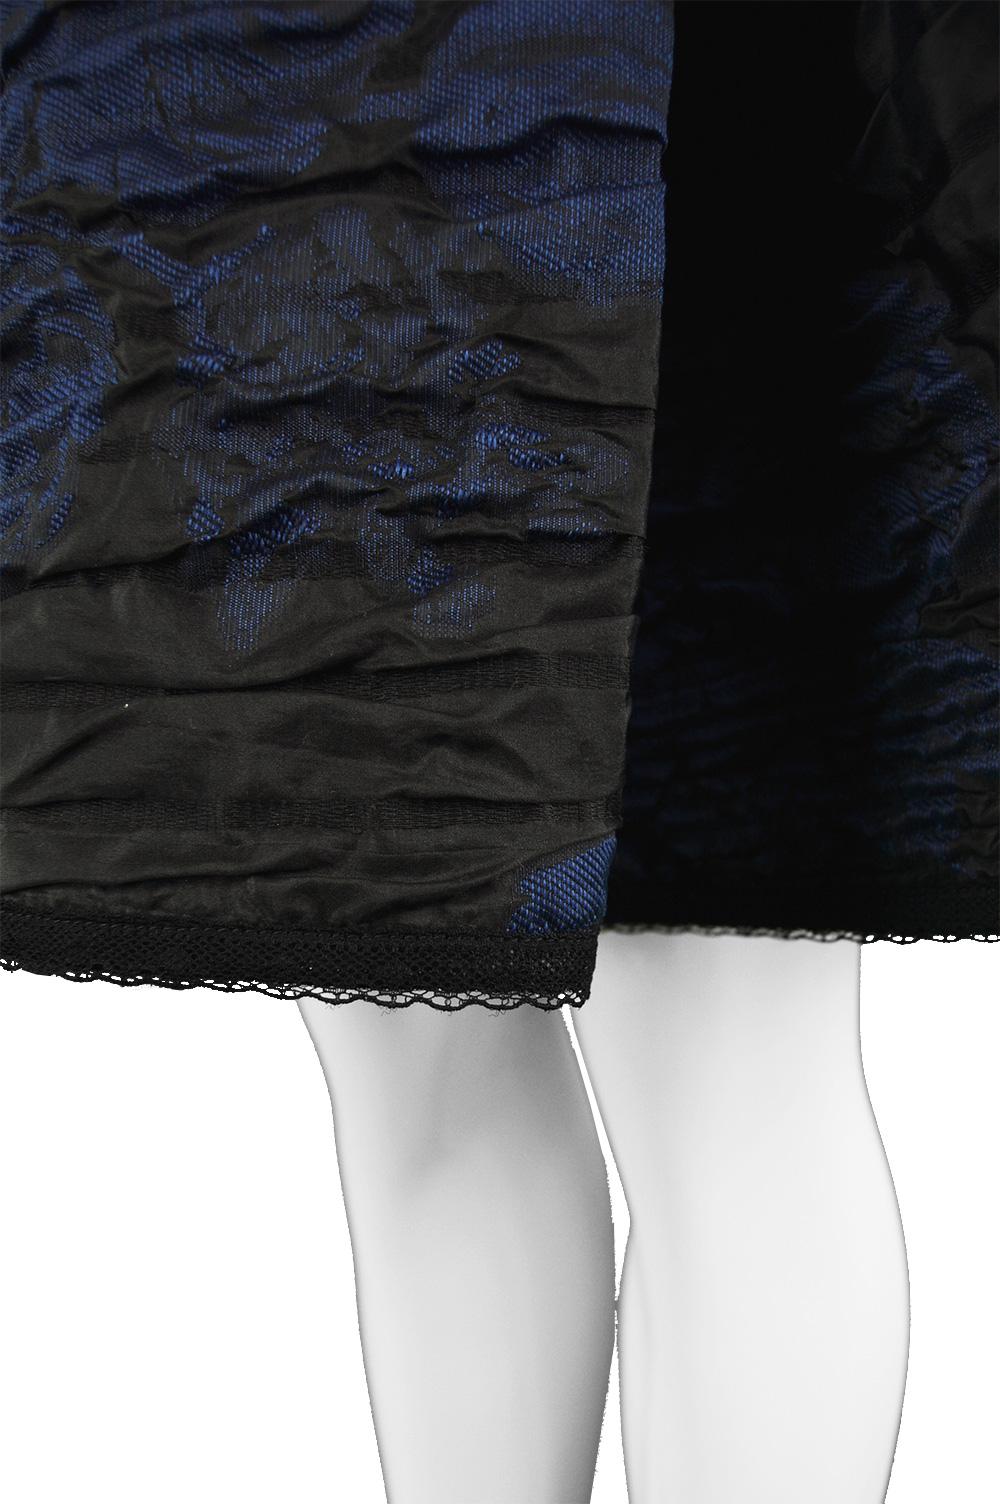 Oscar de la Renta Blue & Black Textured Silk Blend Evening Party Dress, 2010 For Sale 2